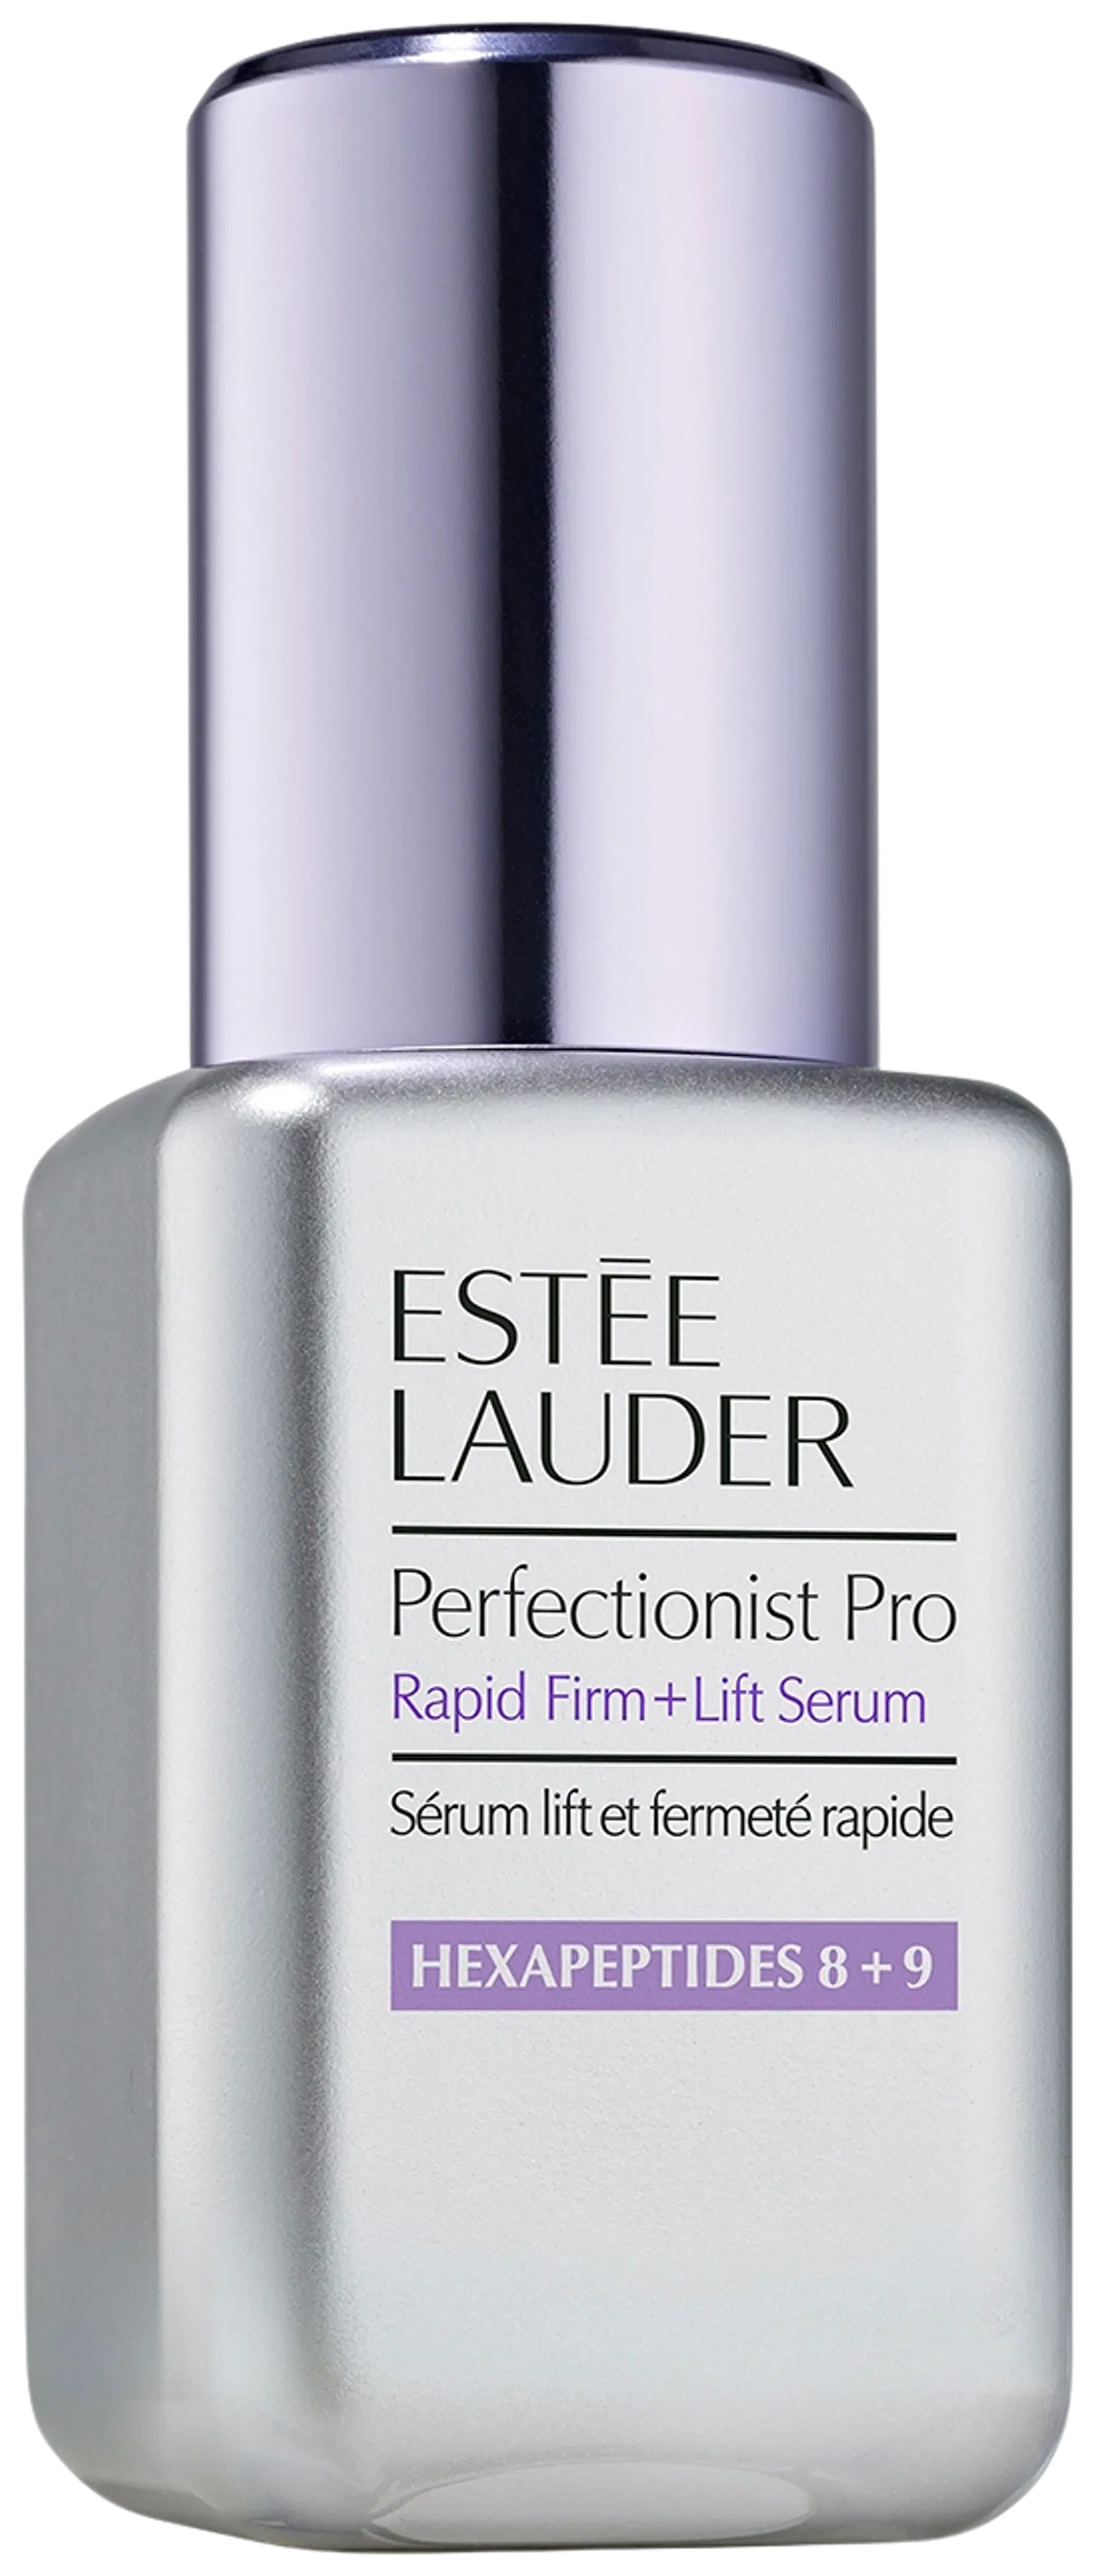 Estée Lauder Perfectionist Pro Rapid Firm+Lift Serum kasvoseerumi 30 ml